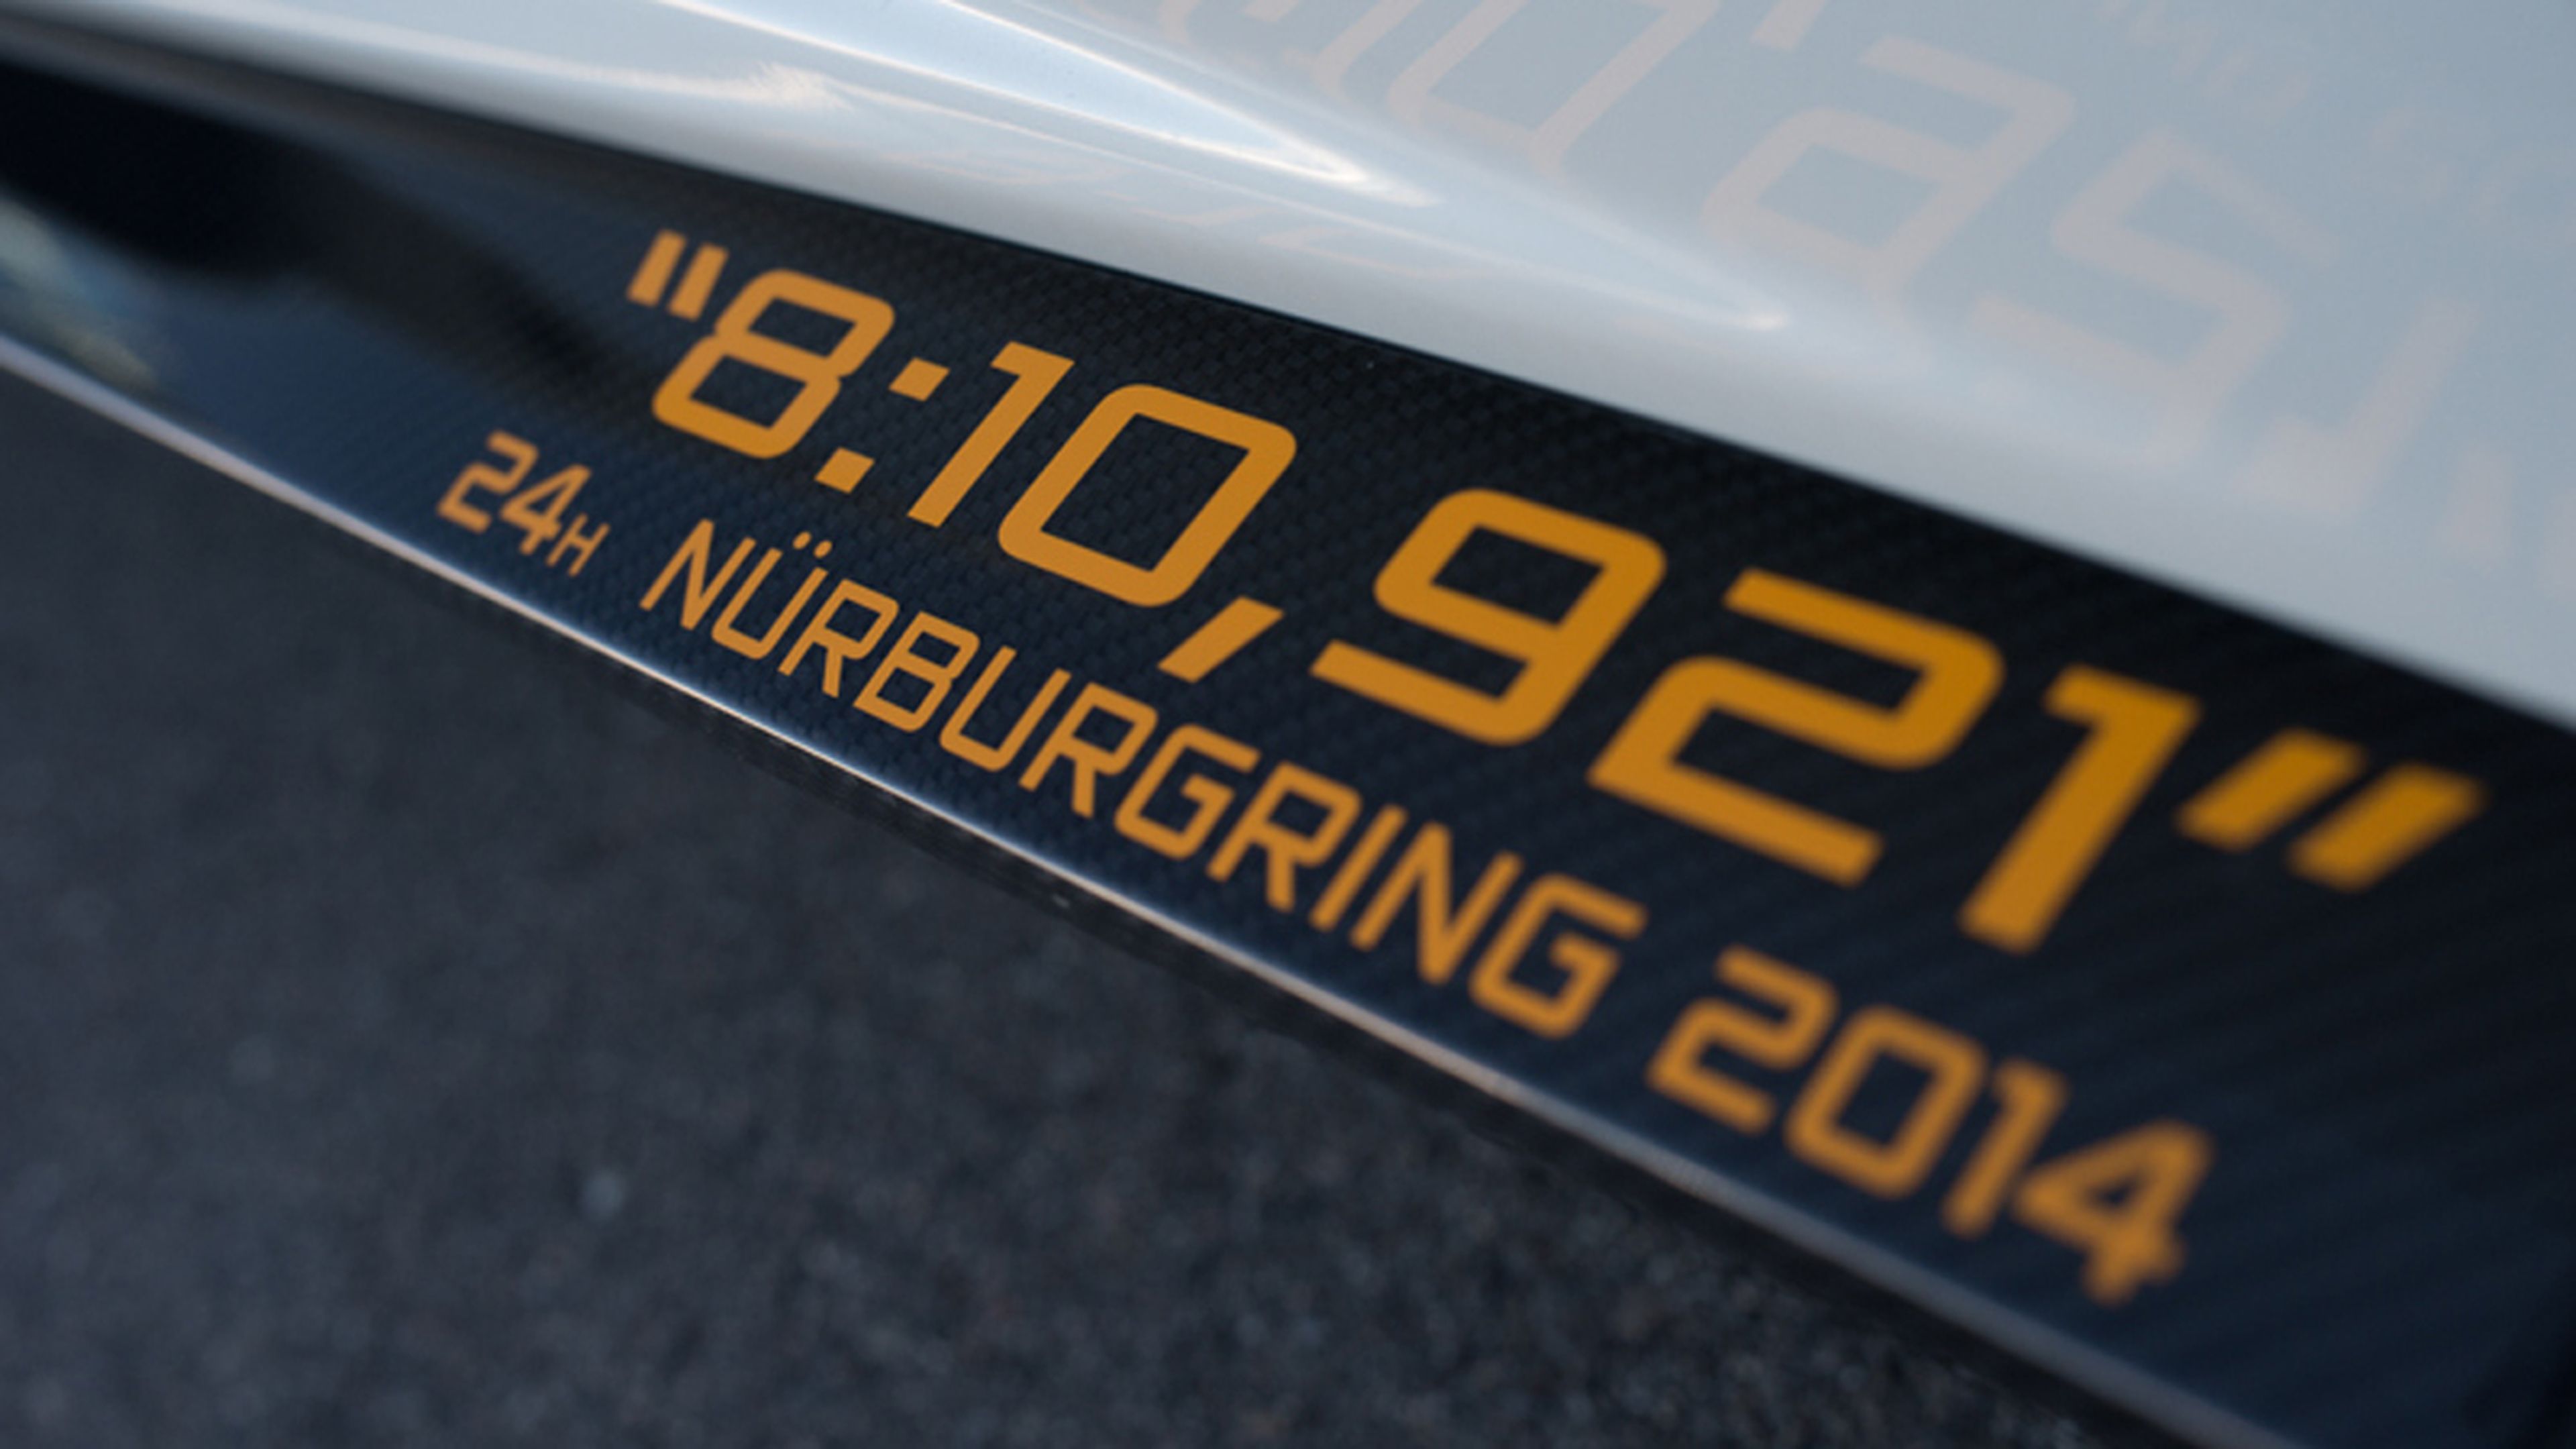 mclaren-650s-spider-24-horas-nurburgring-2014